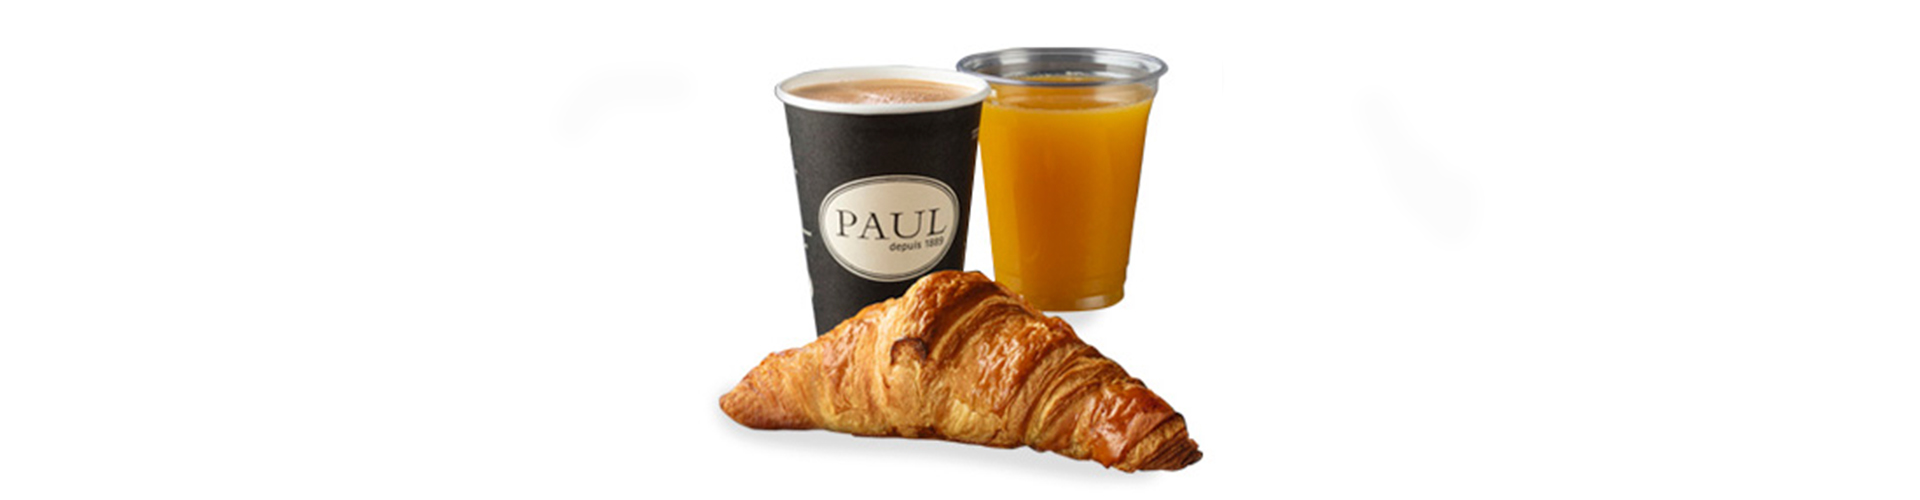 Menu-desayuno-cappuccino-foodpaulbcnt1-40003086